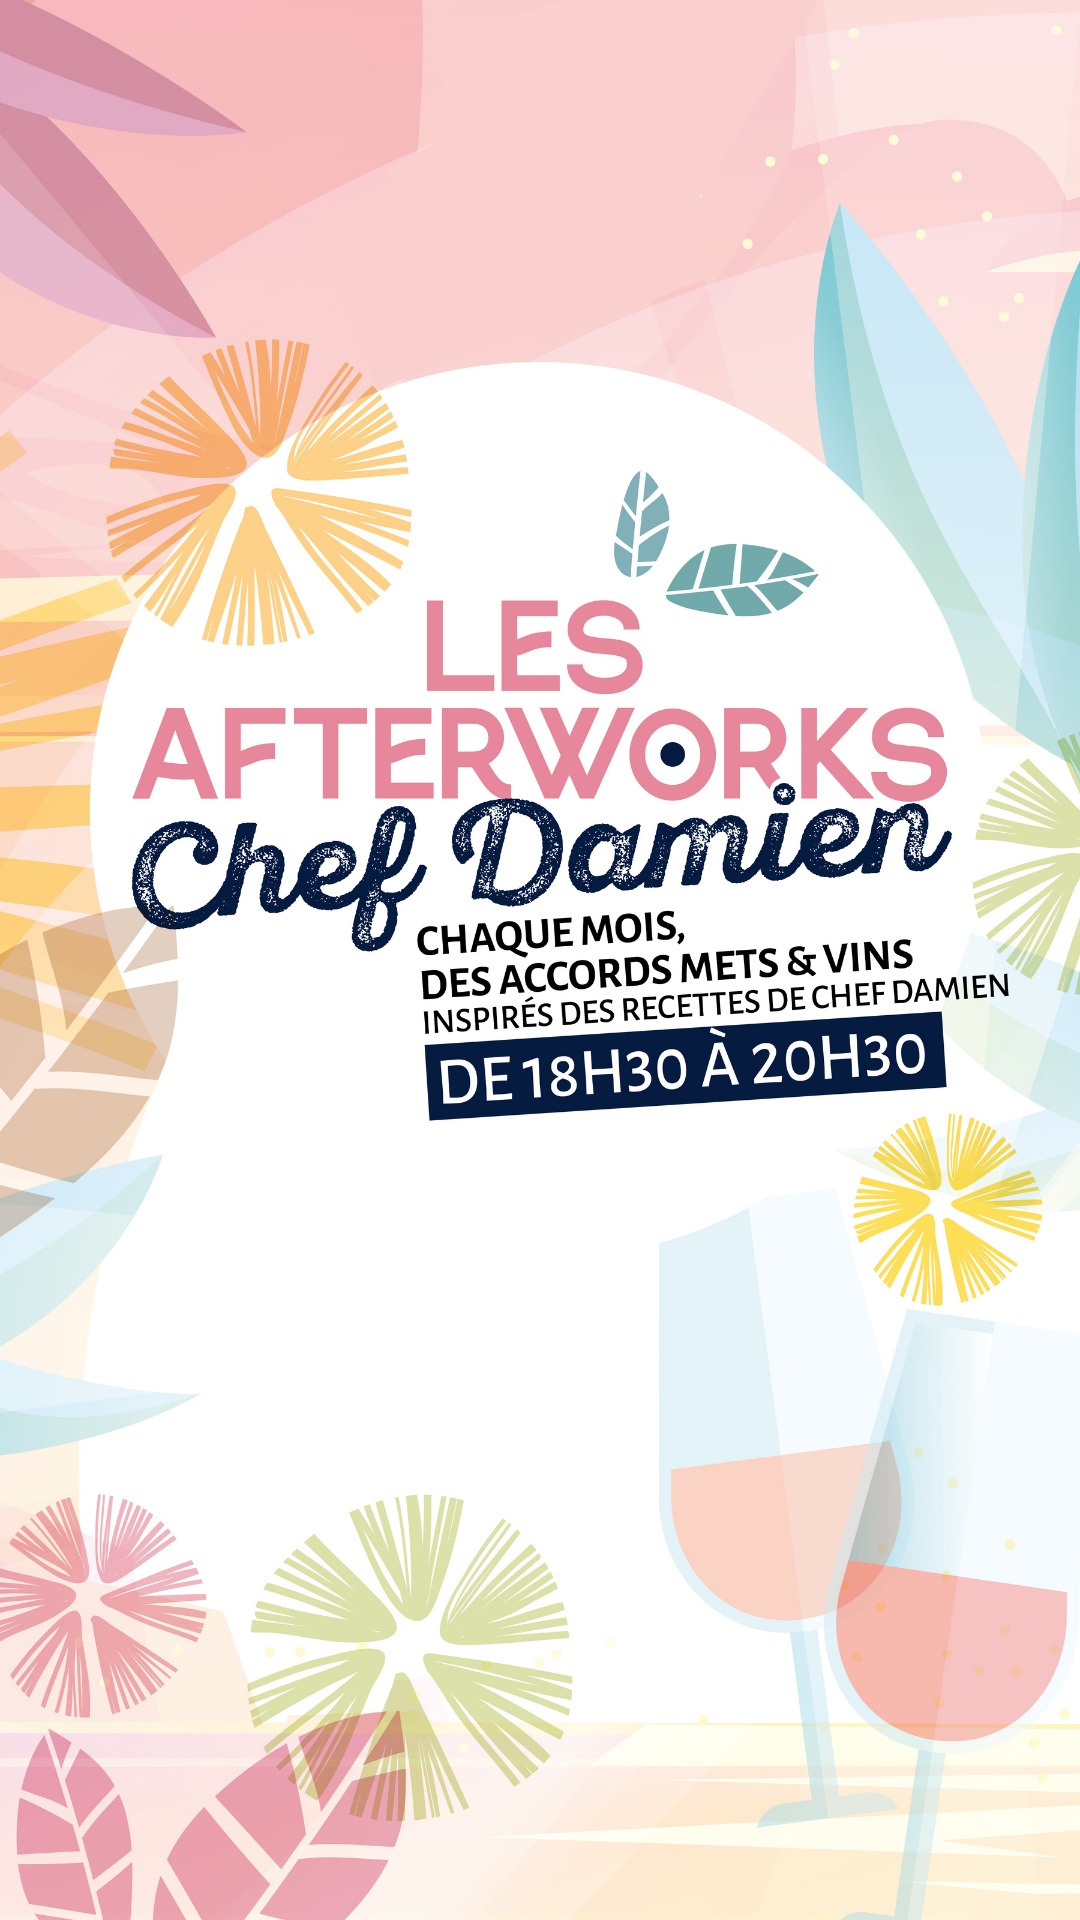 Les Afterworks Chef Damien